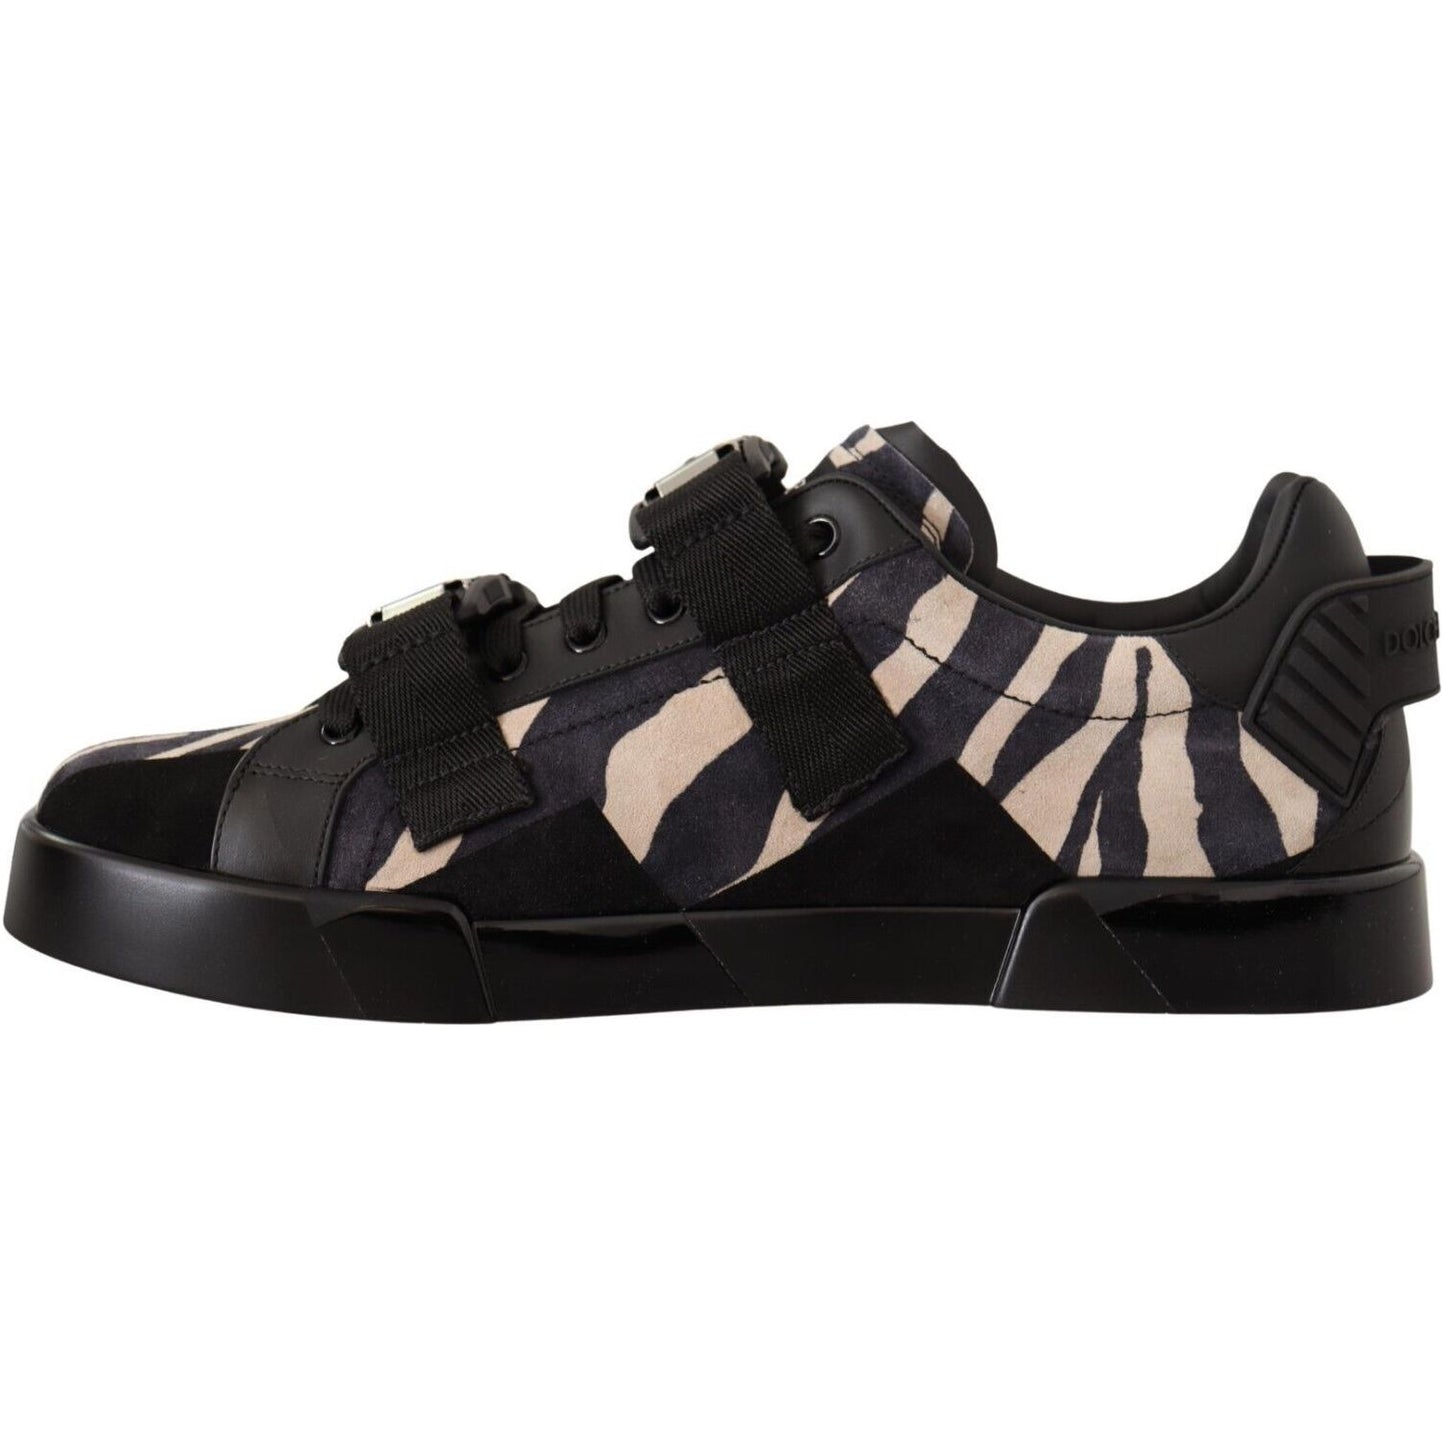 Dolce & Gabbana Zebra Suede Low Top Fashion Sneakers black-white-zebra-suede-rubber-sneakers-shoes-2 MAN SNEAKERS s-l1600-2-67-930c51f5-54c.jpg